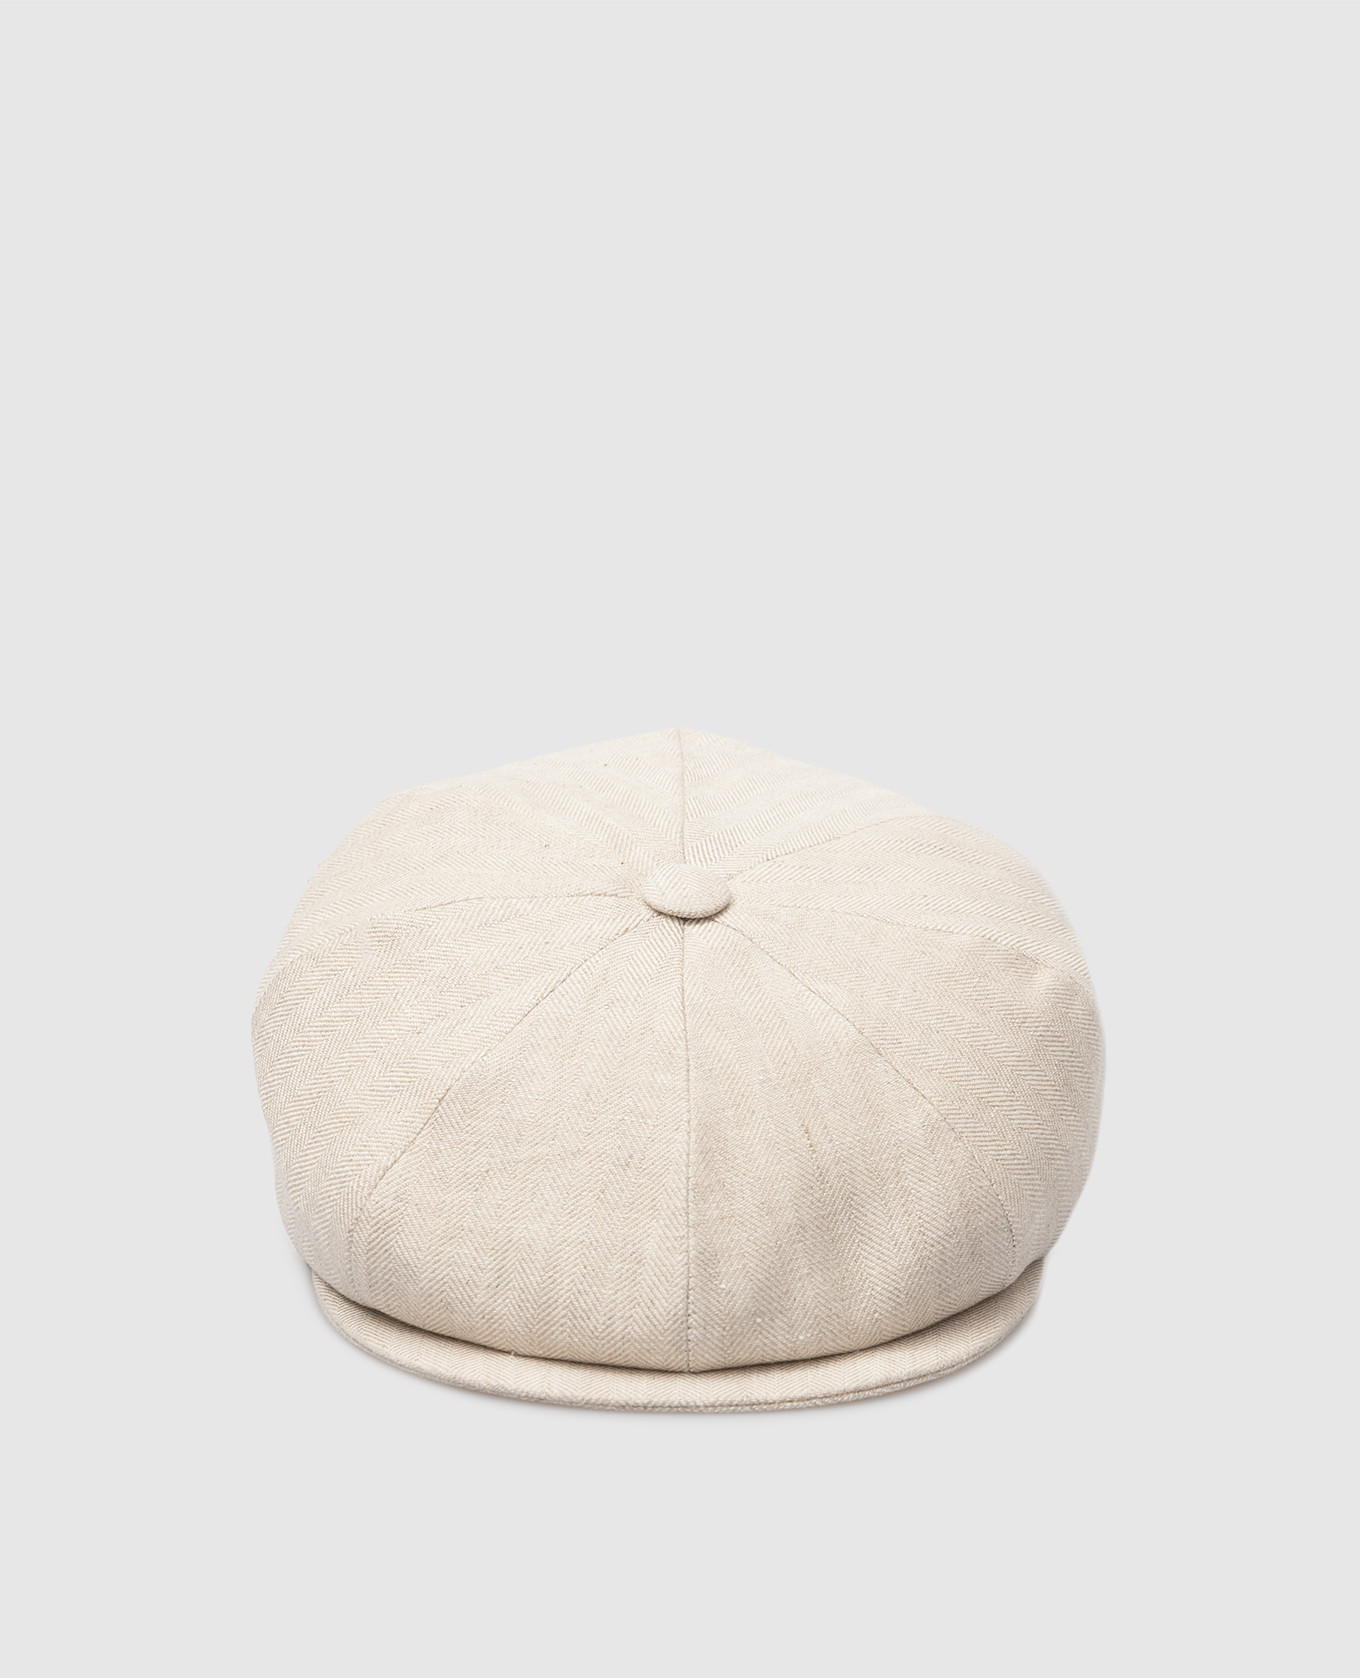 Light beige linen cap